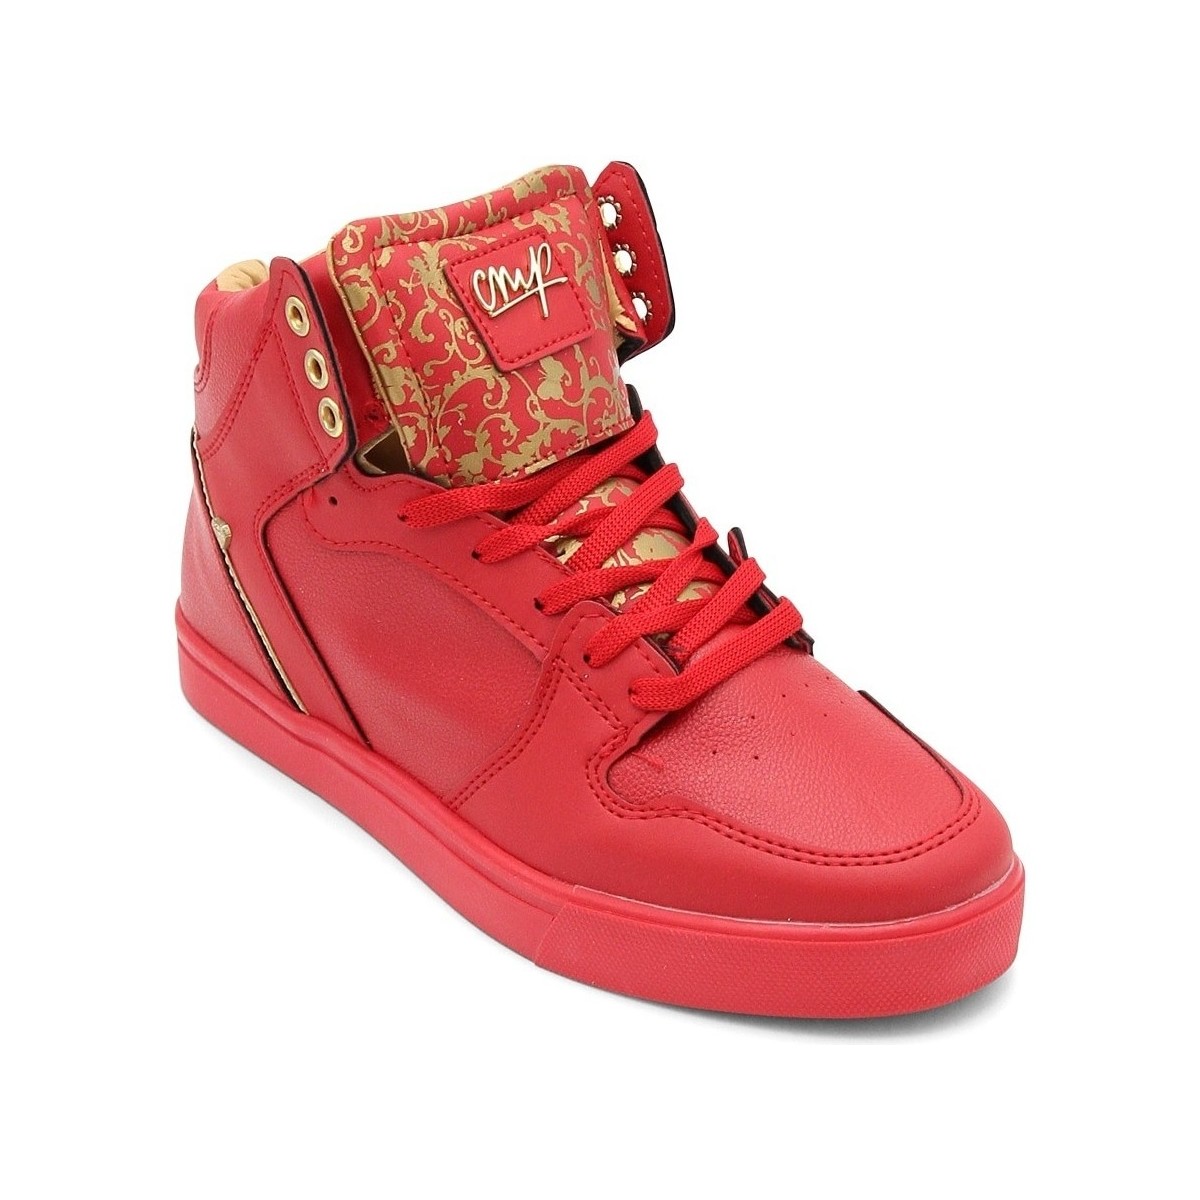 Schuhe Herren Sneaker Cash Money Majesty Red Gold Rot